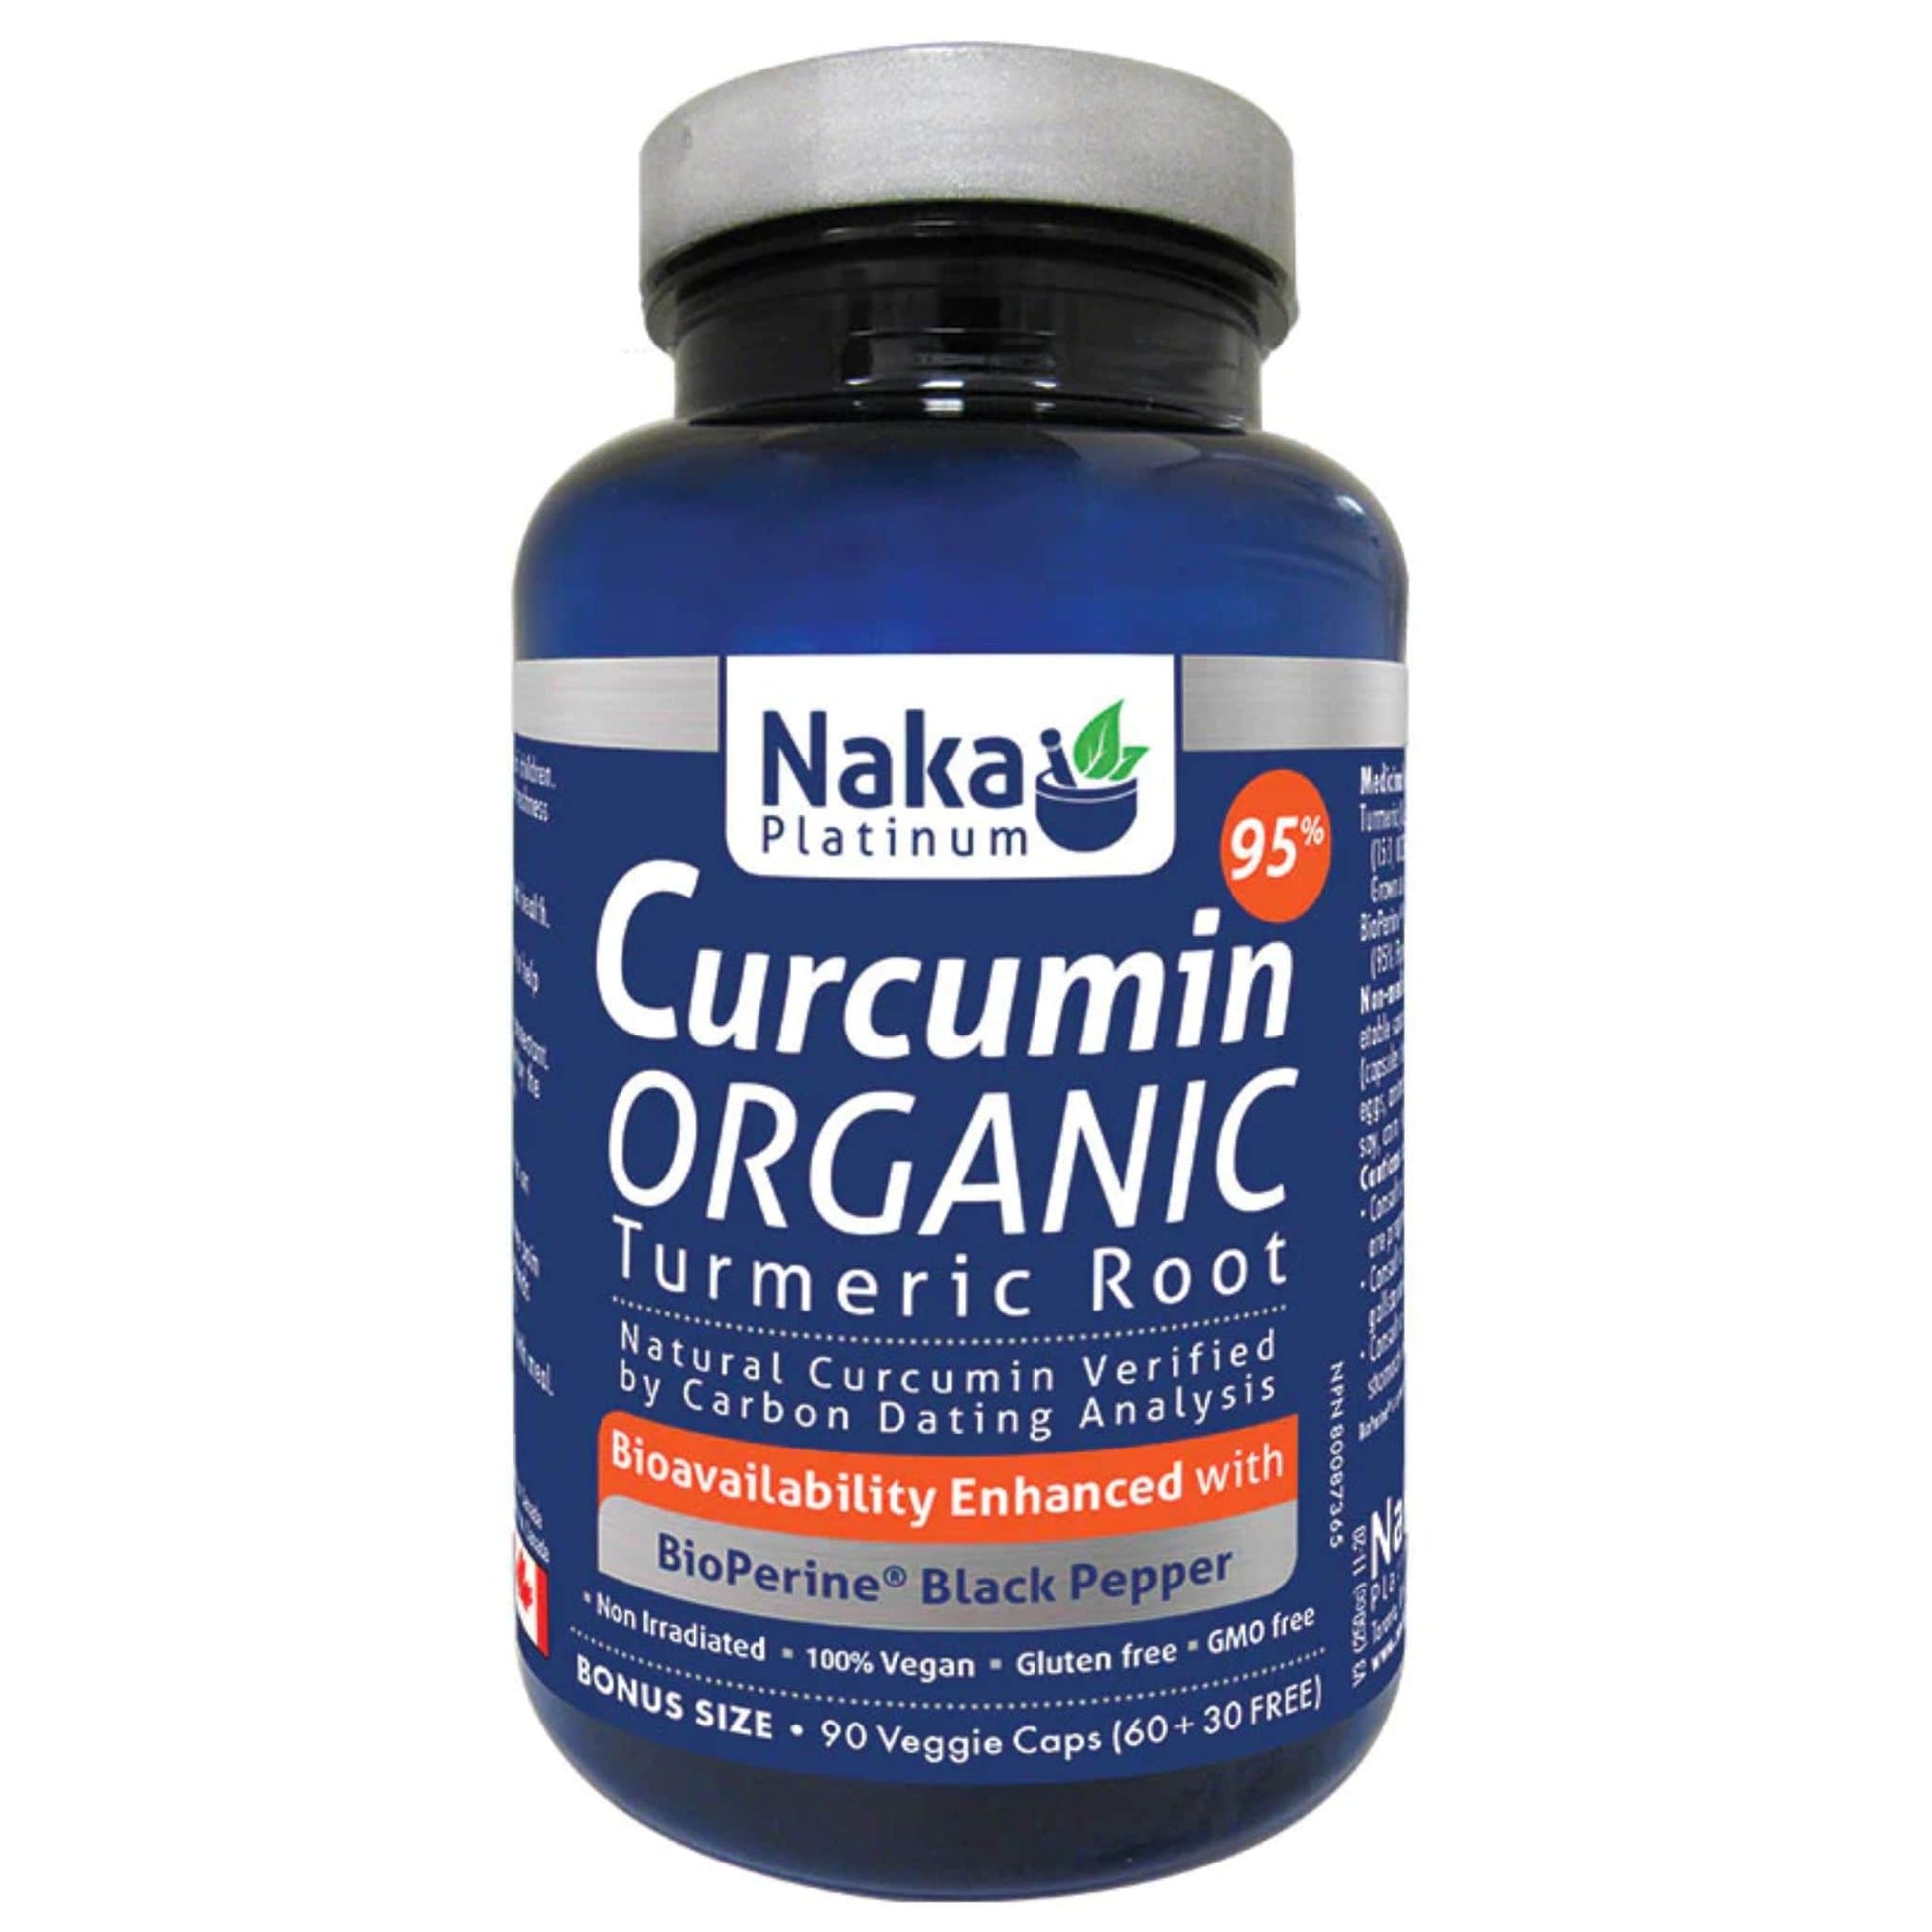 90 Vegetable Capsules | Naka Platinum Curcumin Organic Turmeric Root with Bioperine Black Pepper bottle